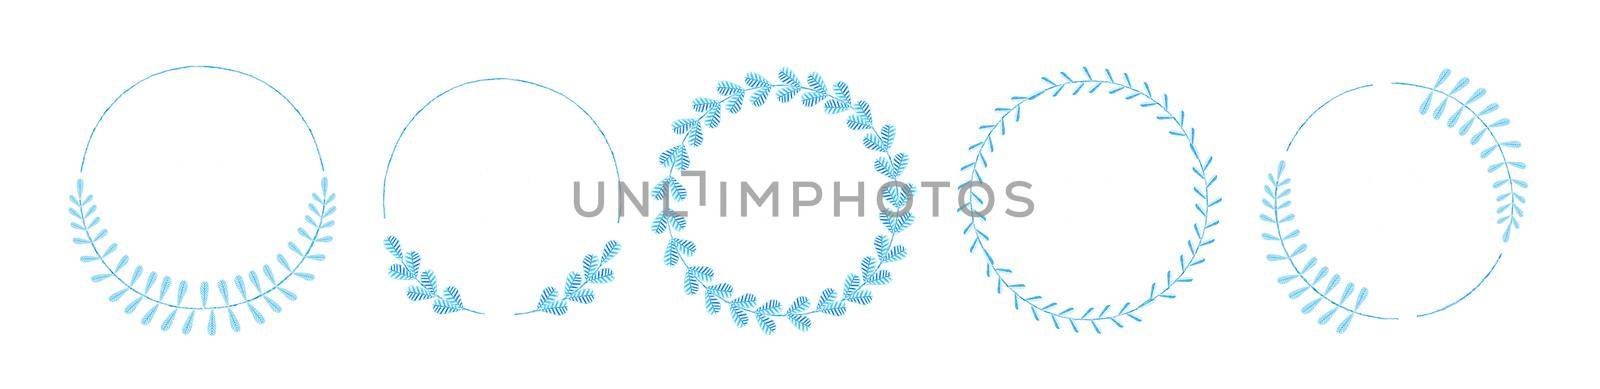 Set of differen blue silhouette round cartoon wreaths depicting an award, achievement, heraldry, nobility, emblem